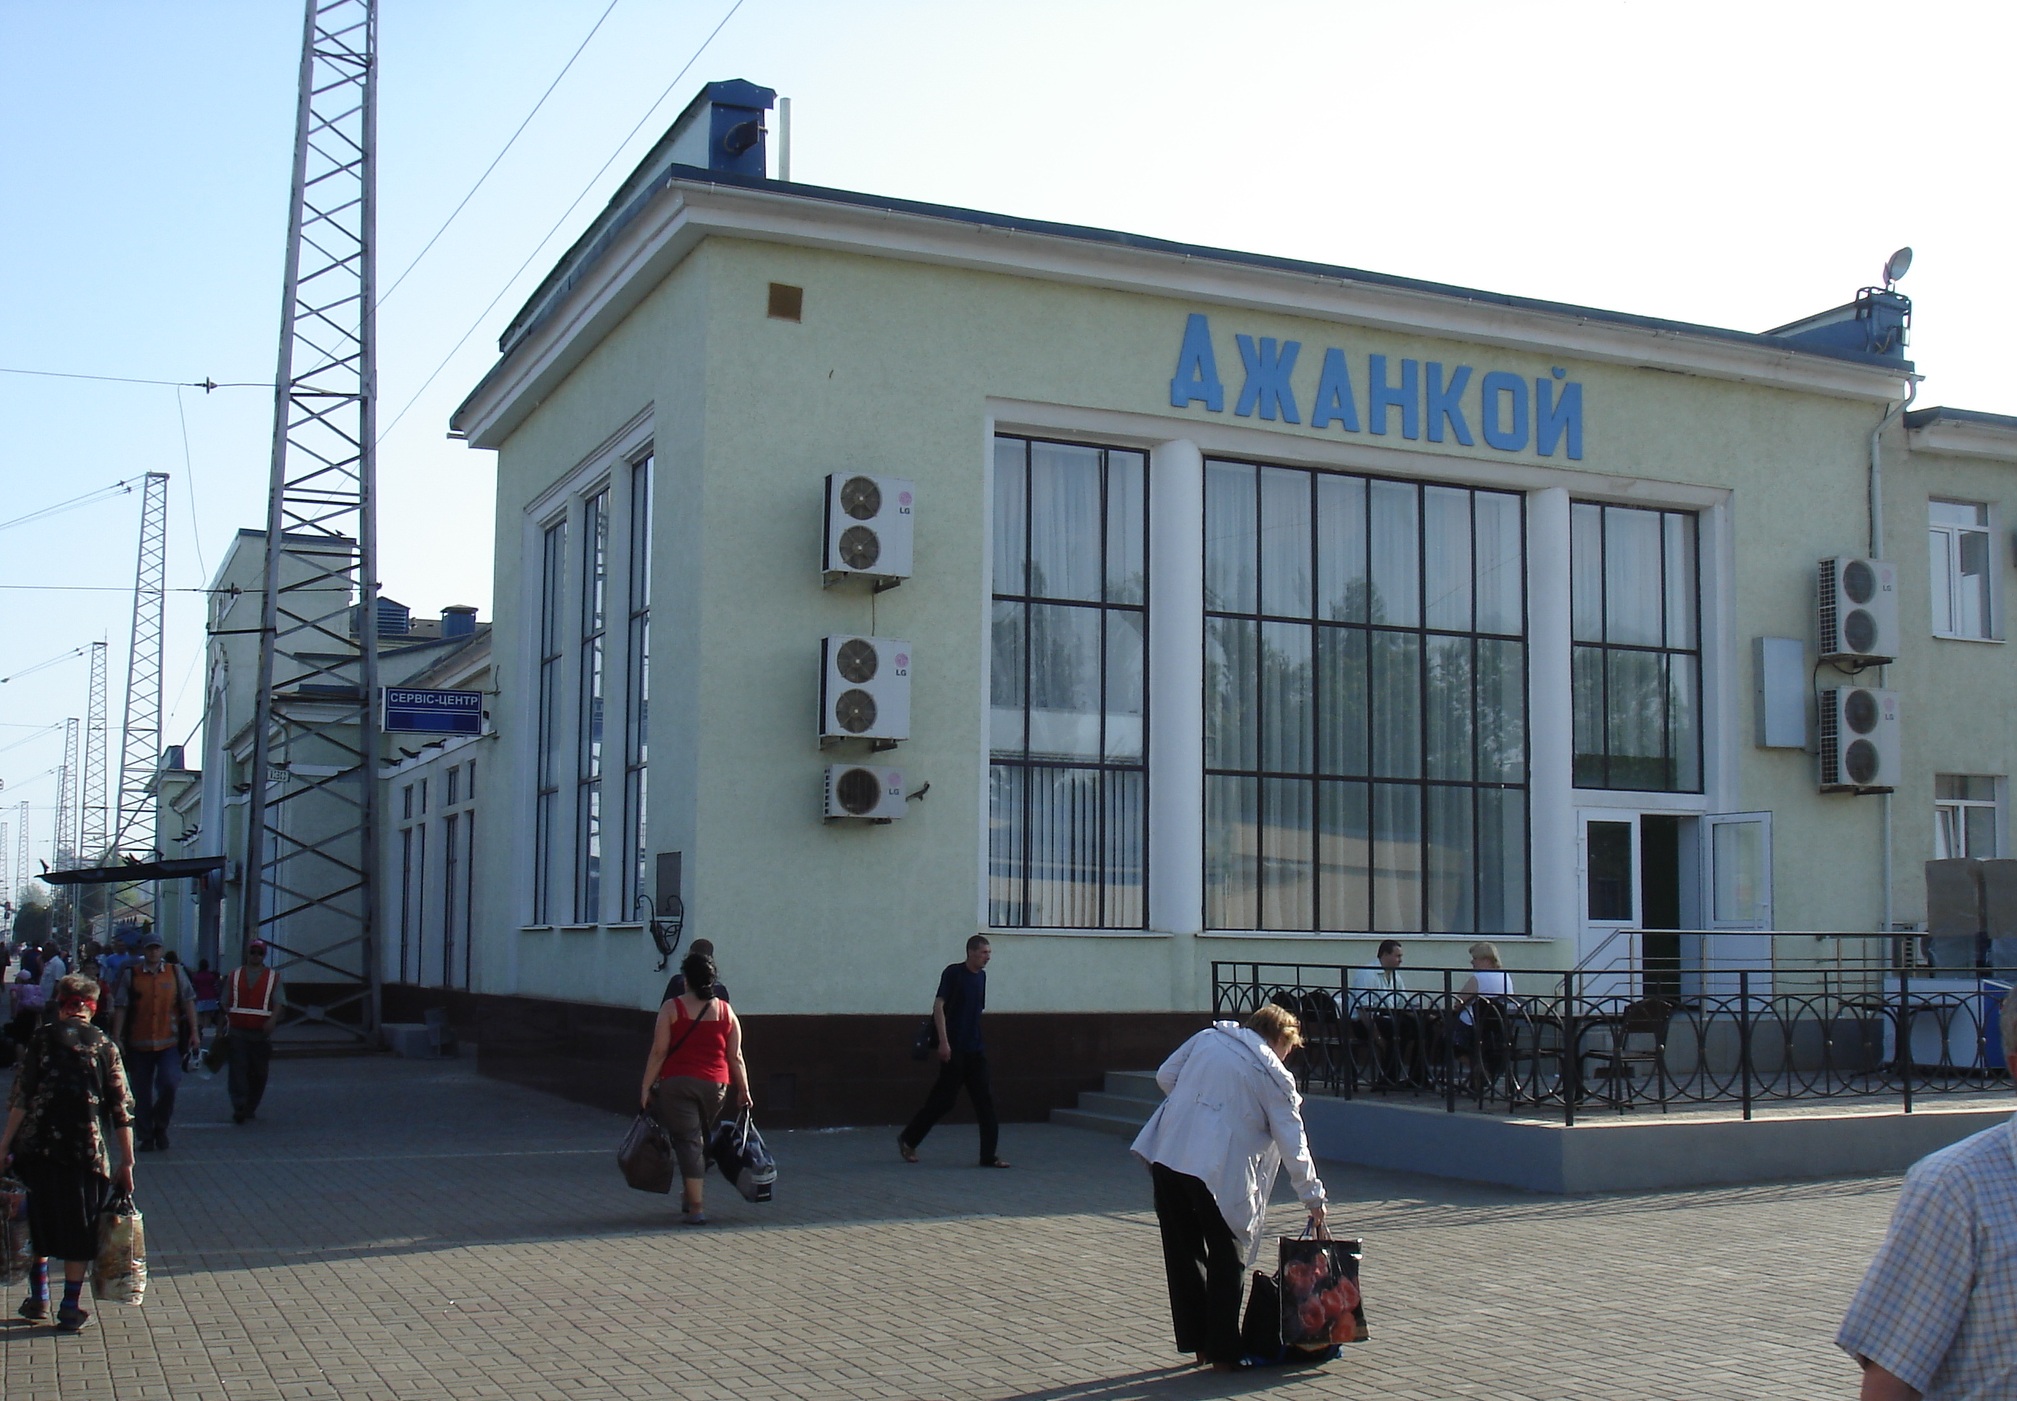 Djankoi-Station